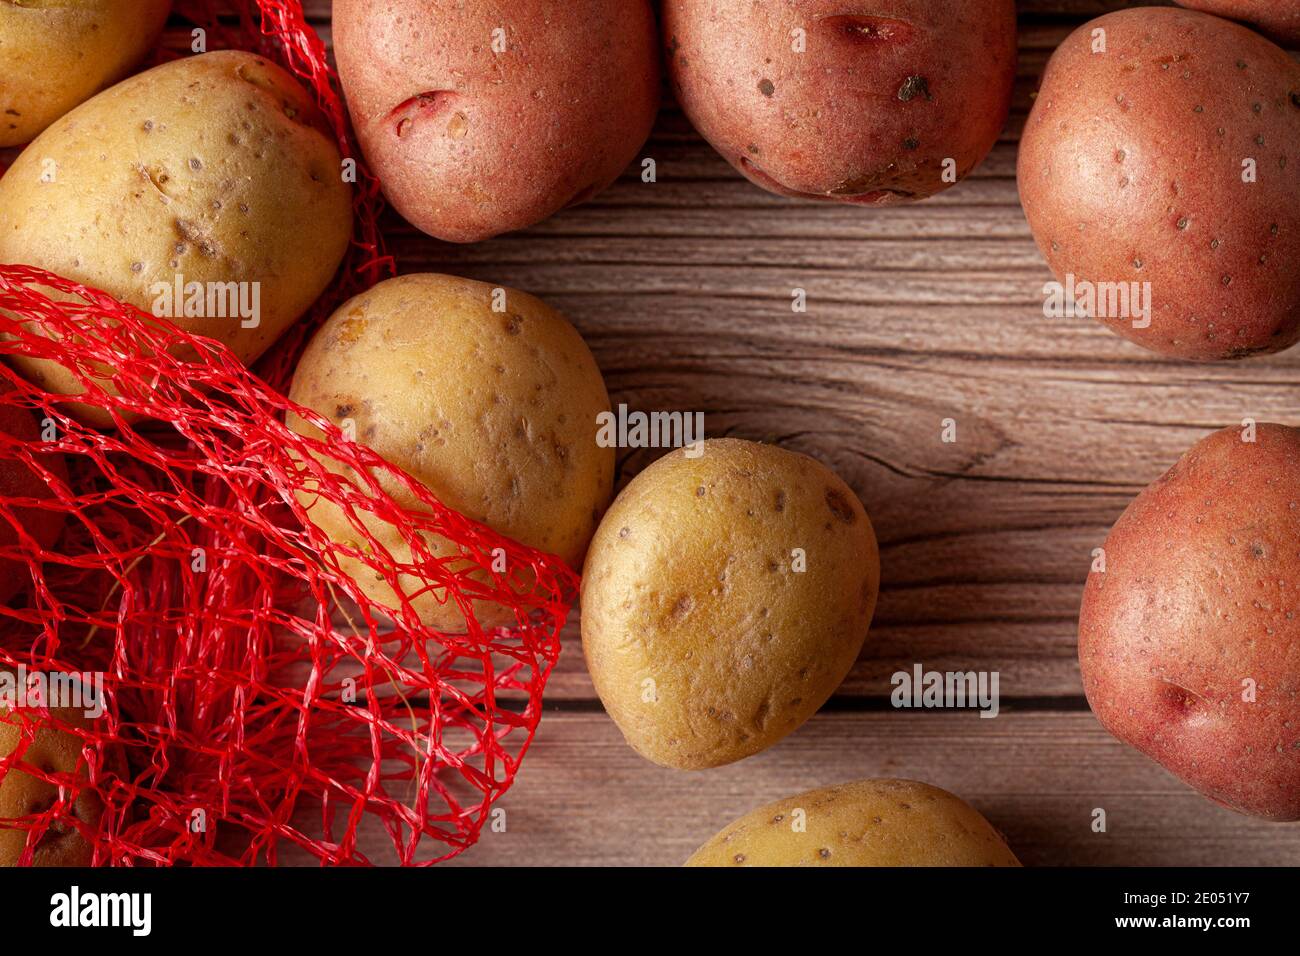 Potato sack hi-res stock photography and images - Alamy